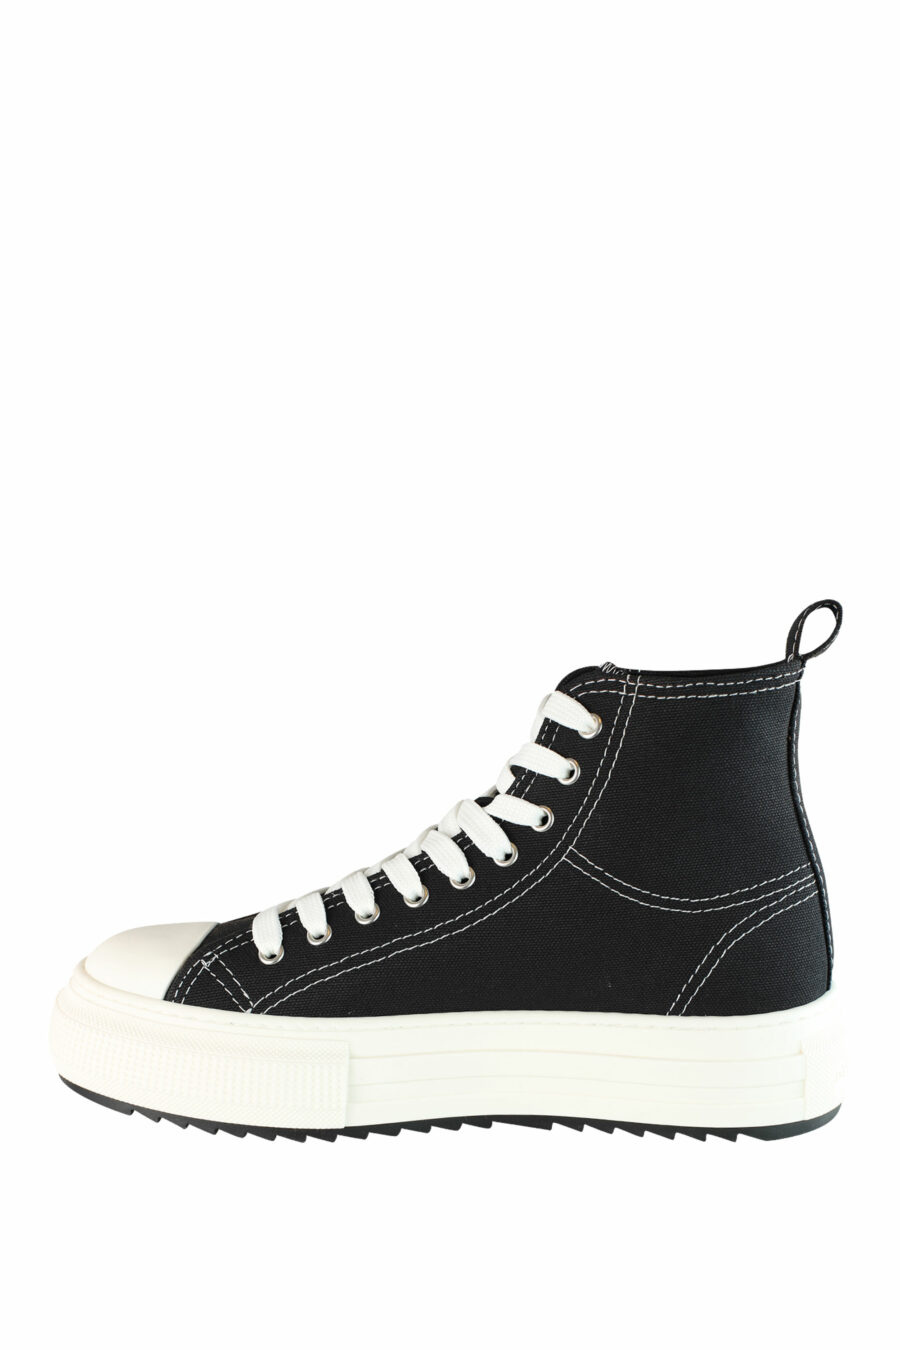 Sapatilhas pretas estilo bota com plataforma e mini logótipo - IMG 1422